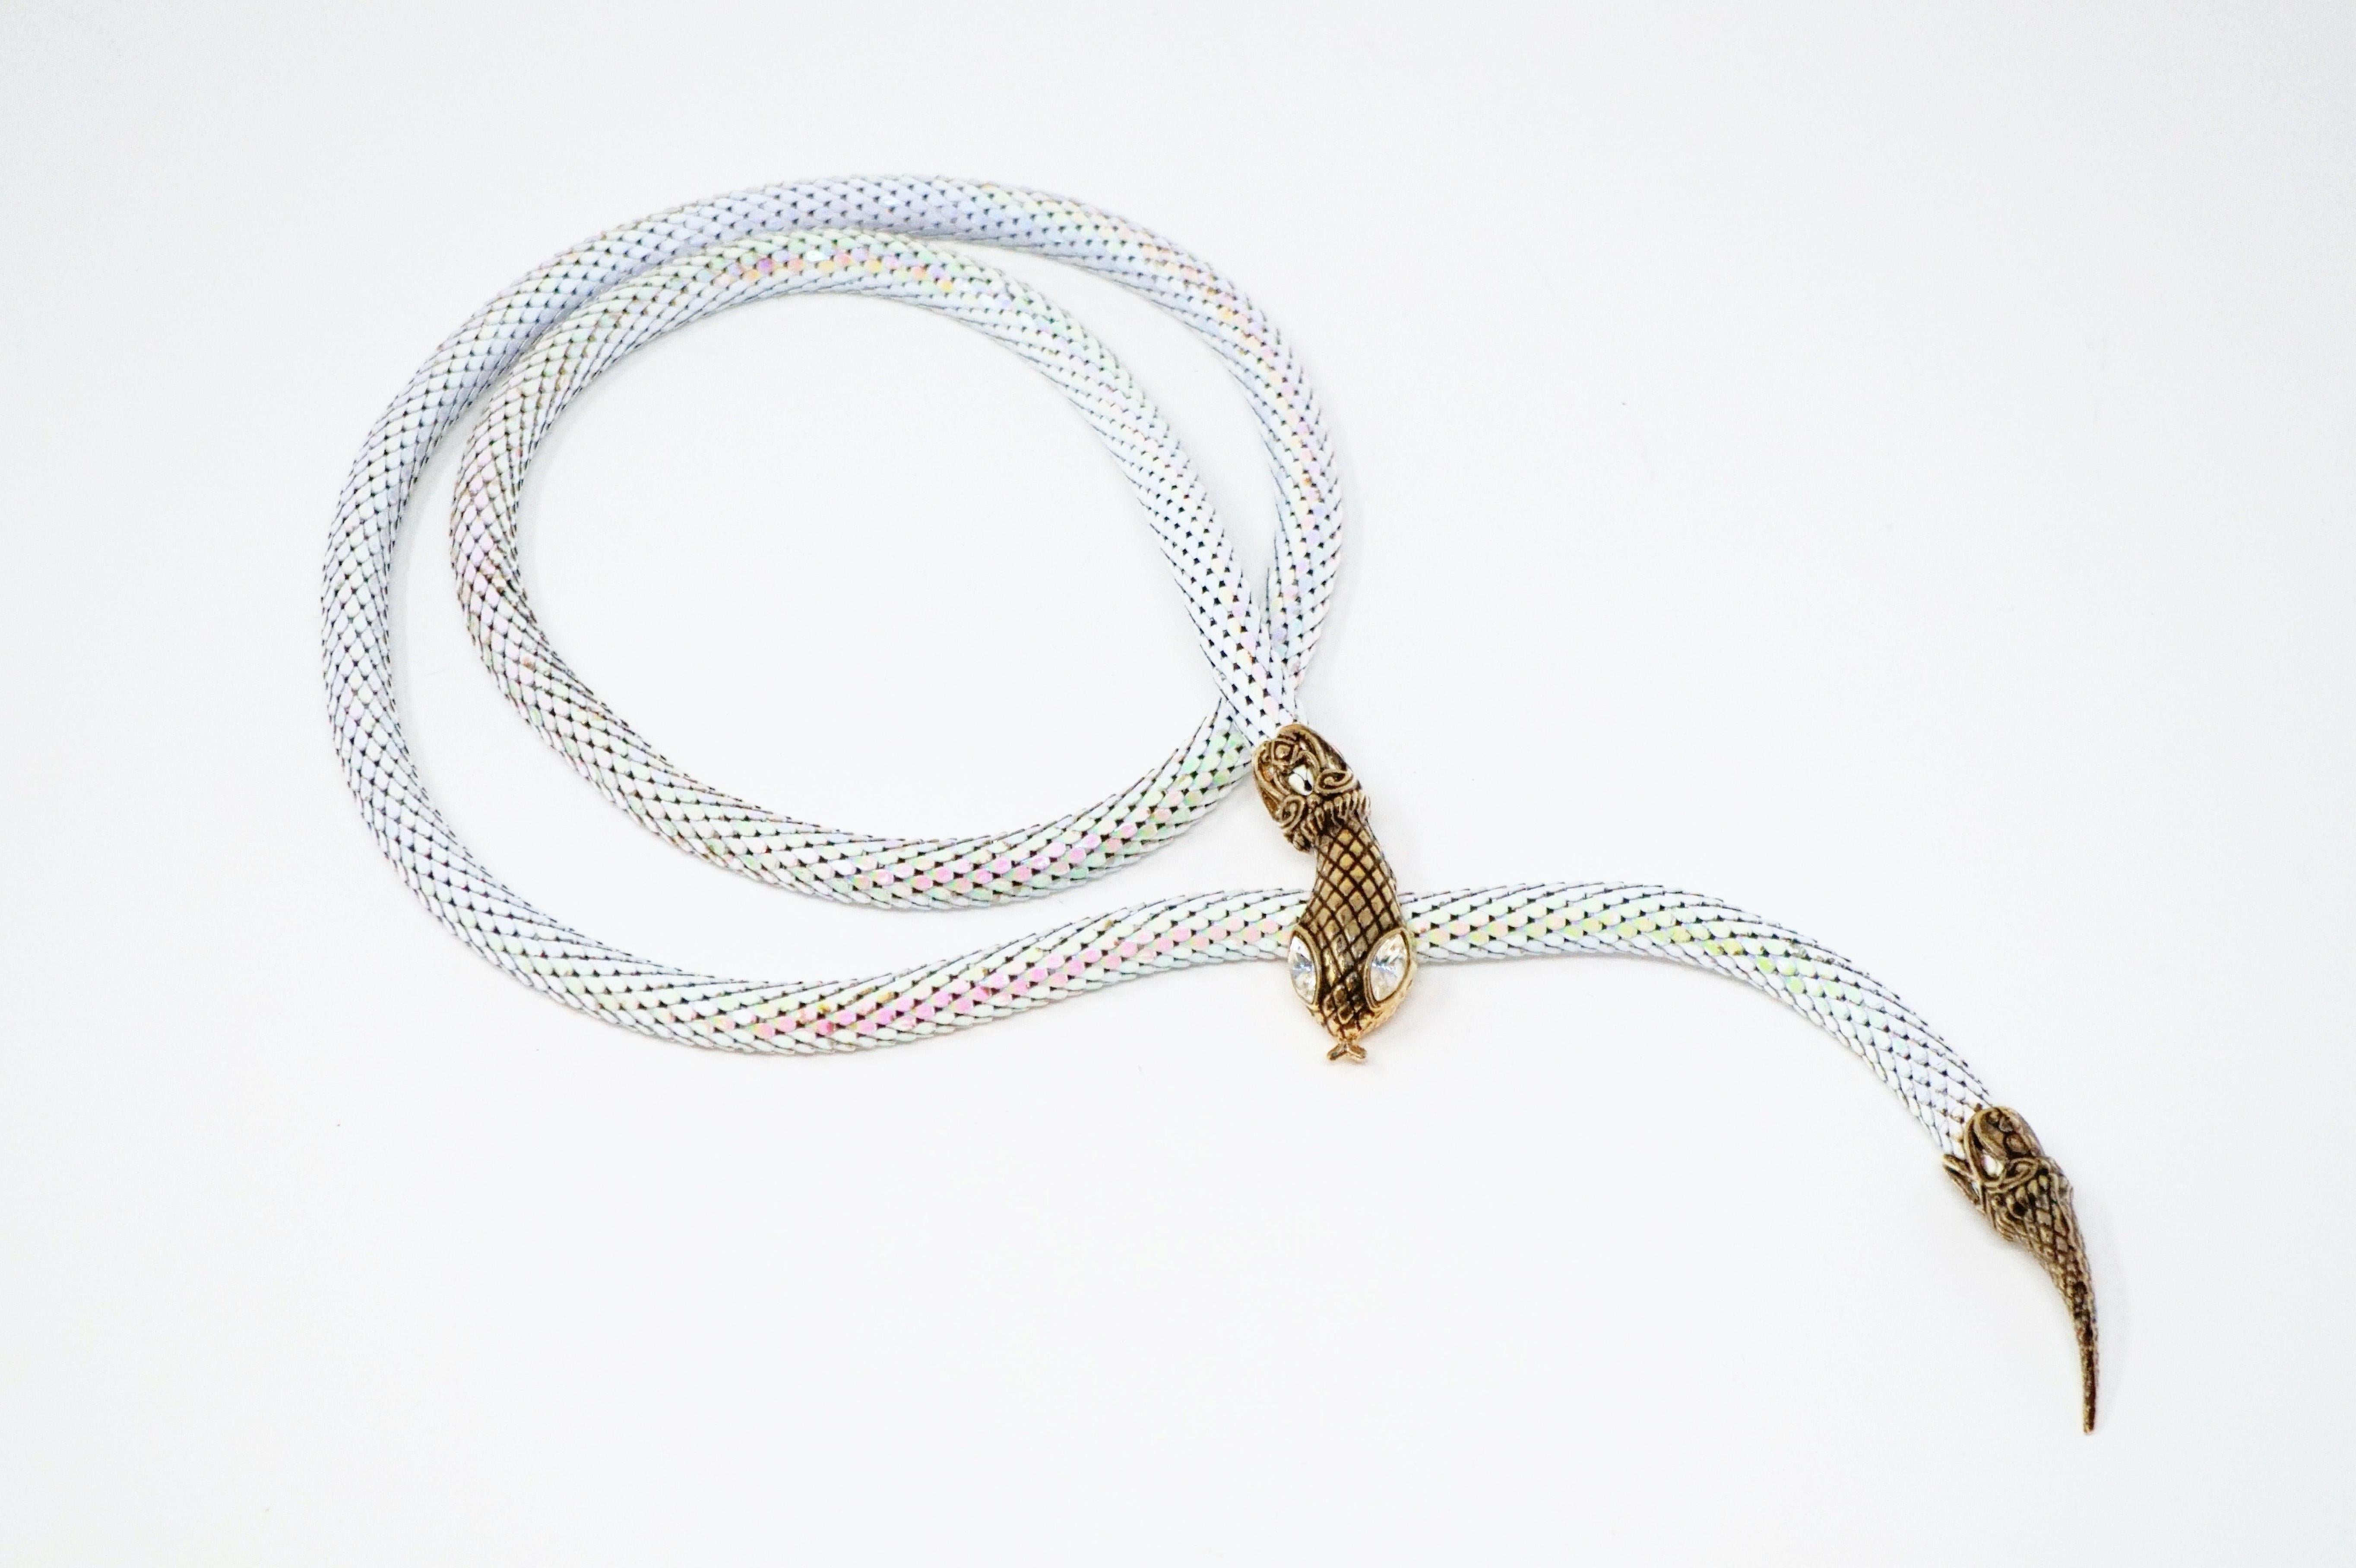 1980s Iridescent Mesh Snake Belt or Necklace by DL Auld Co, Signed 4